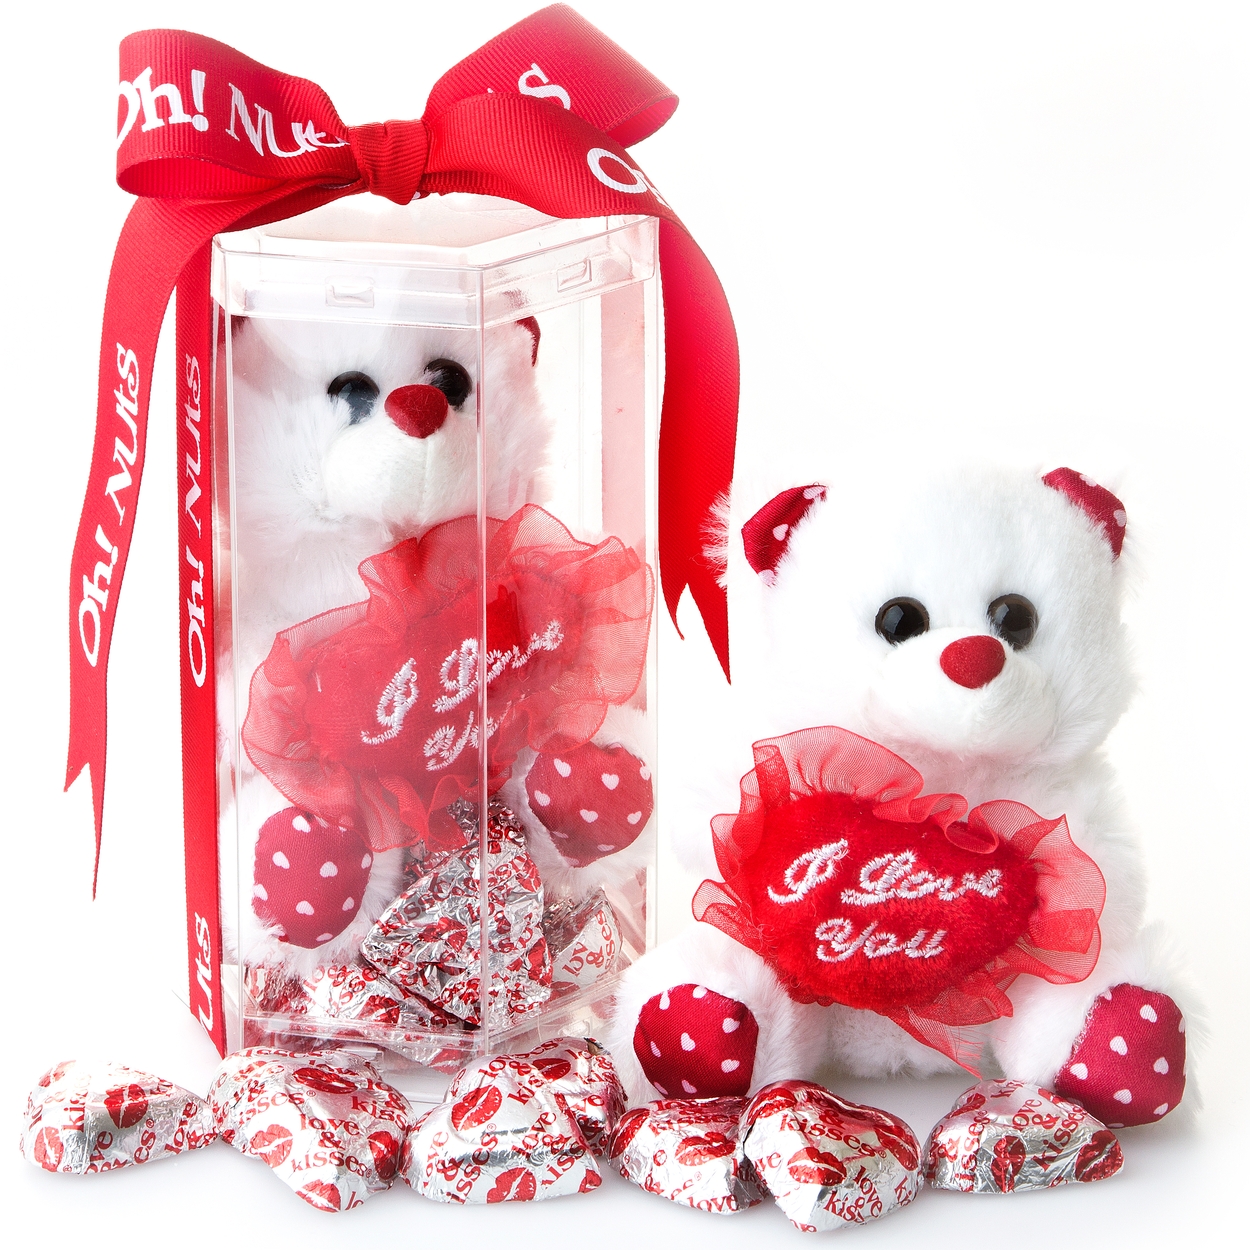 Chocolate Day Gift | chocolate box gif ideas #valentinesday - YouTube